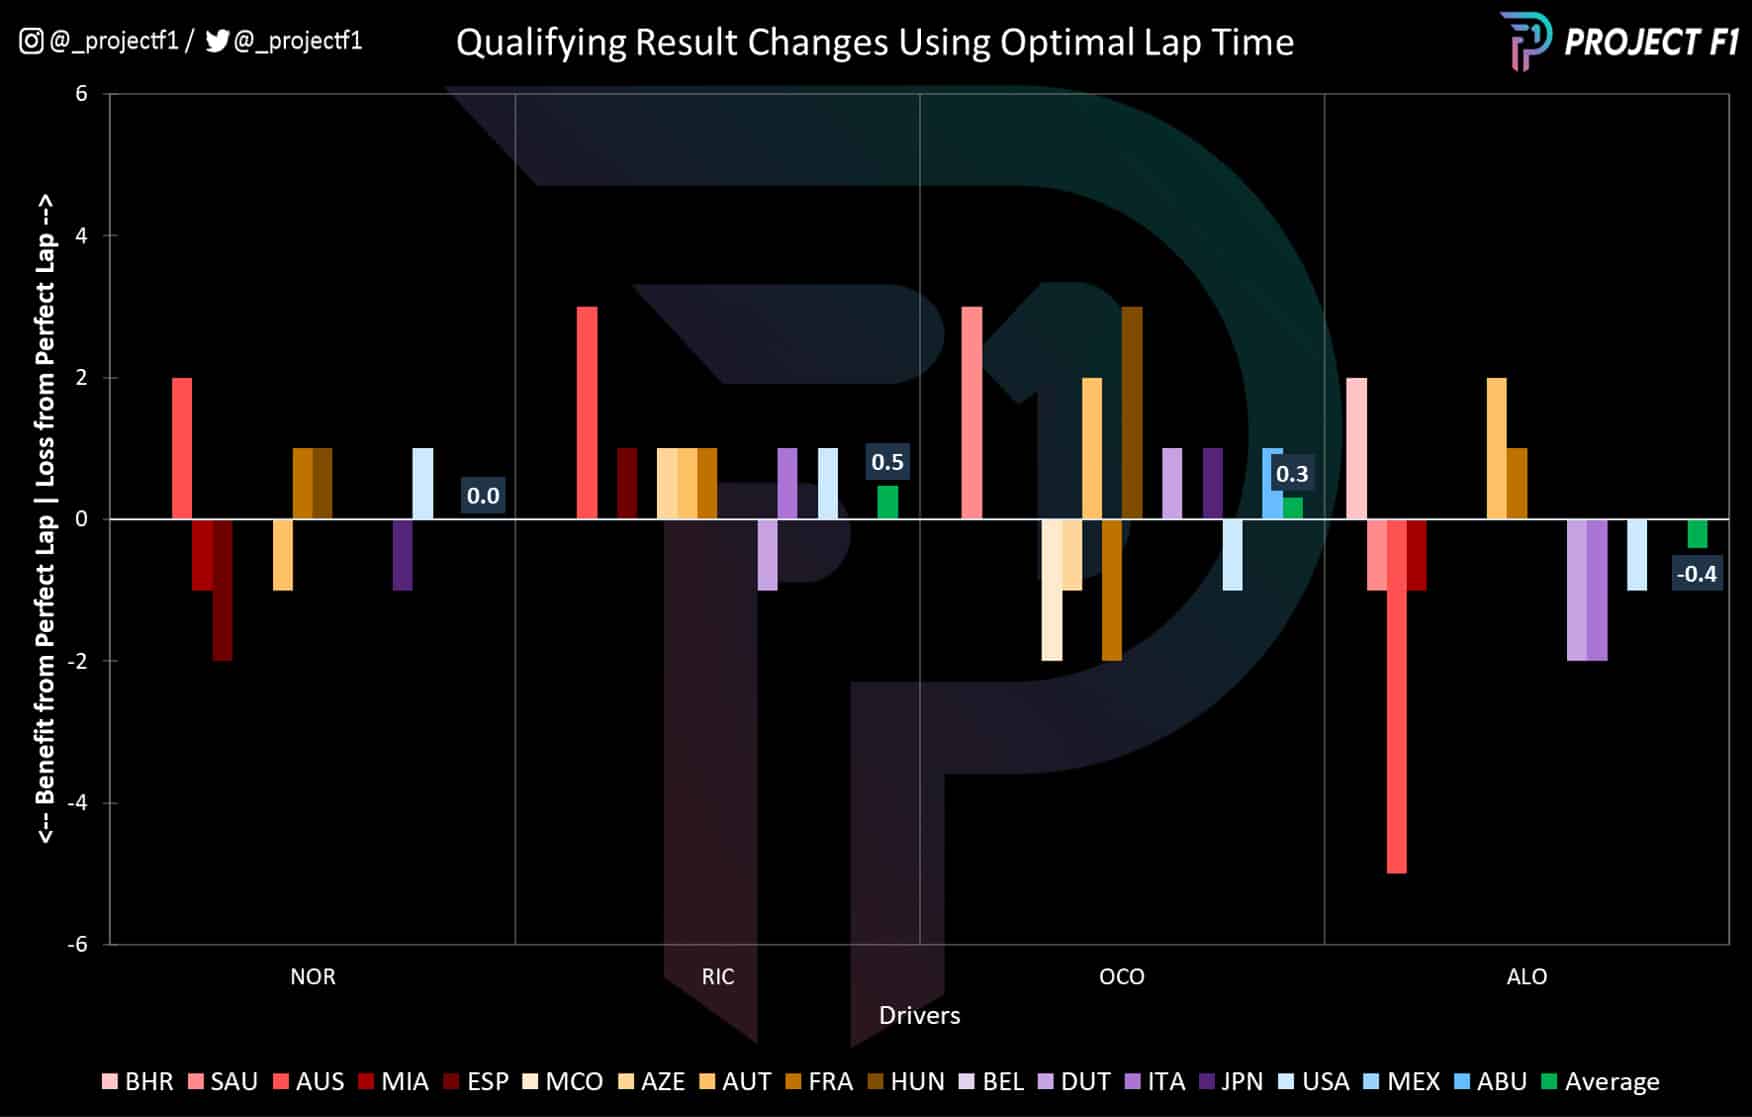 McLaren vs Alpine 2022 F1 qualifying results at optimum times